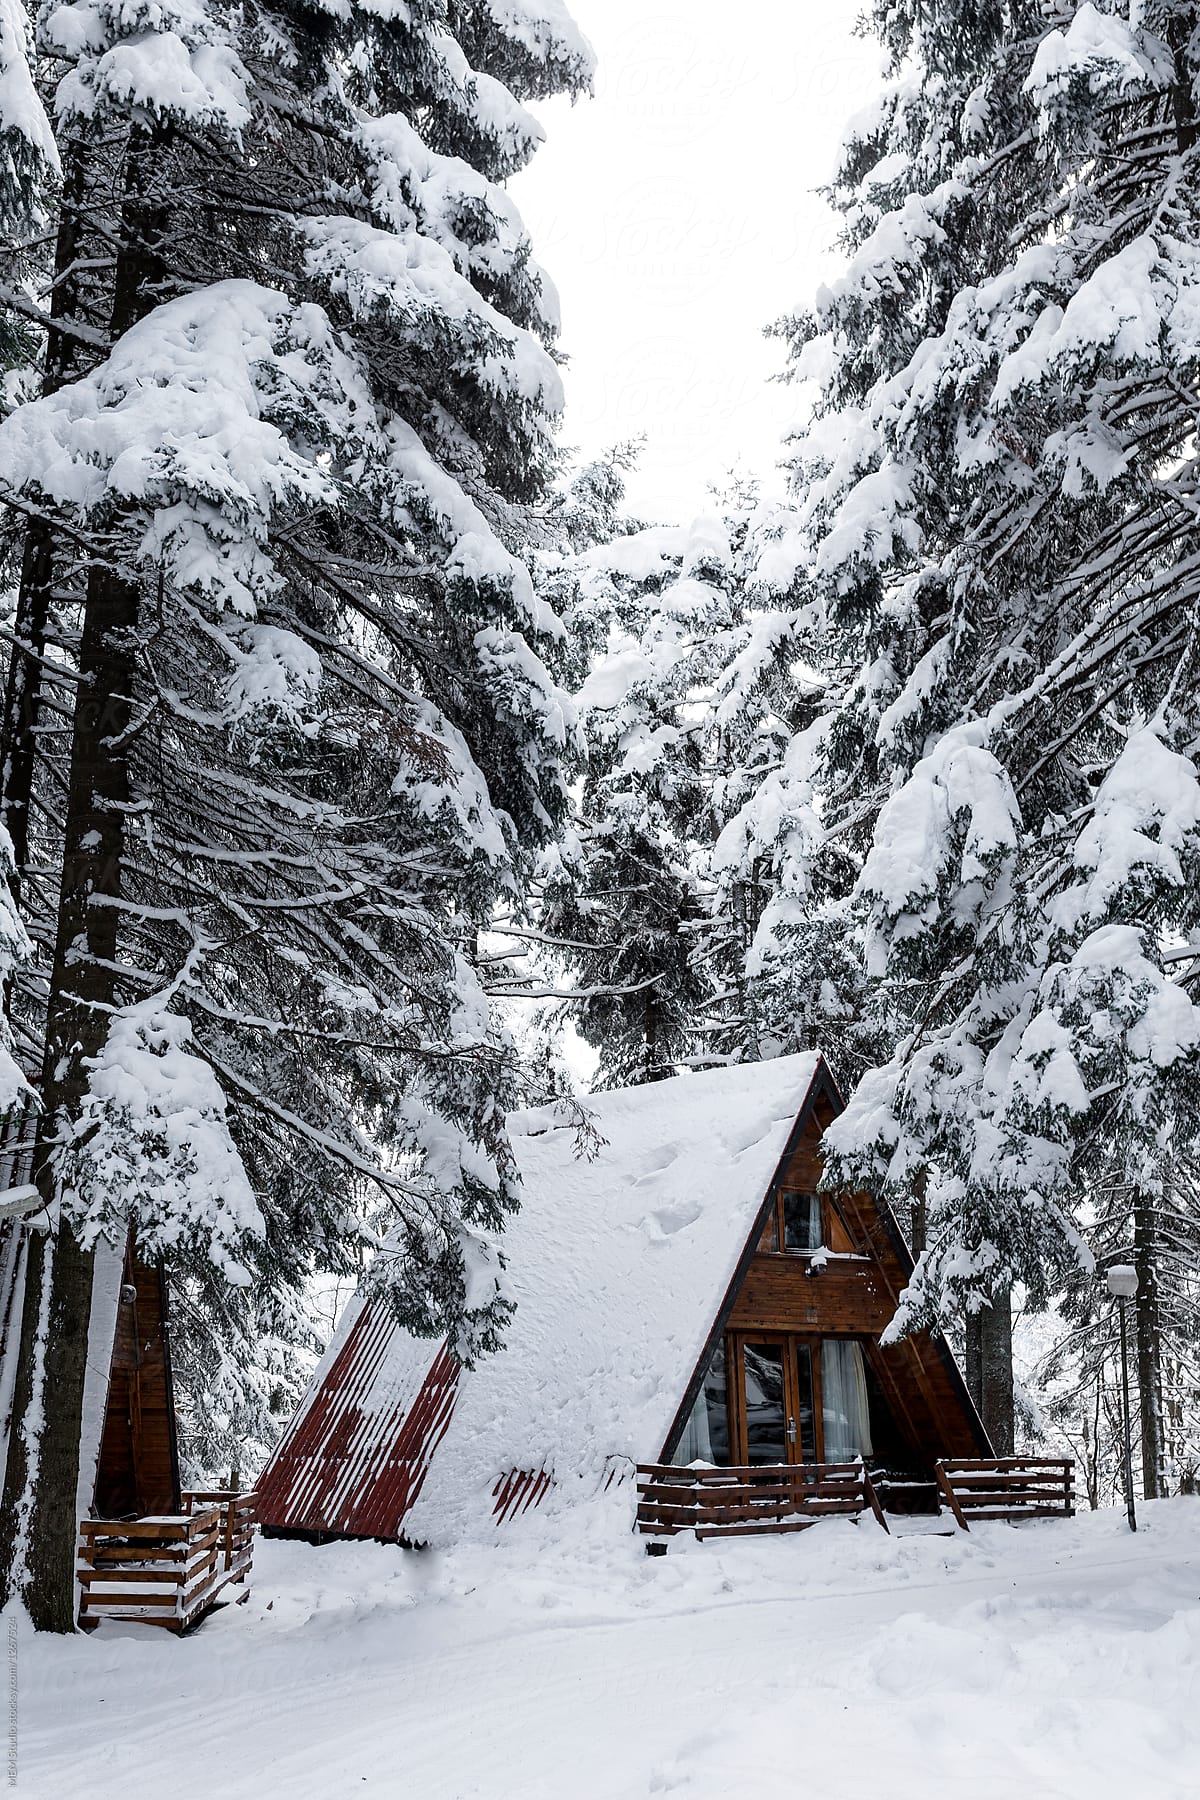 Small hut in the snow